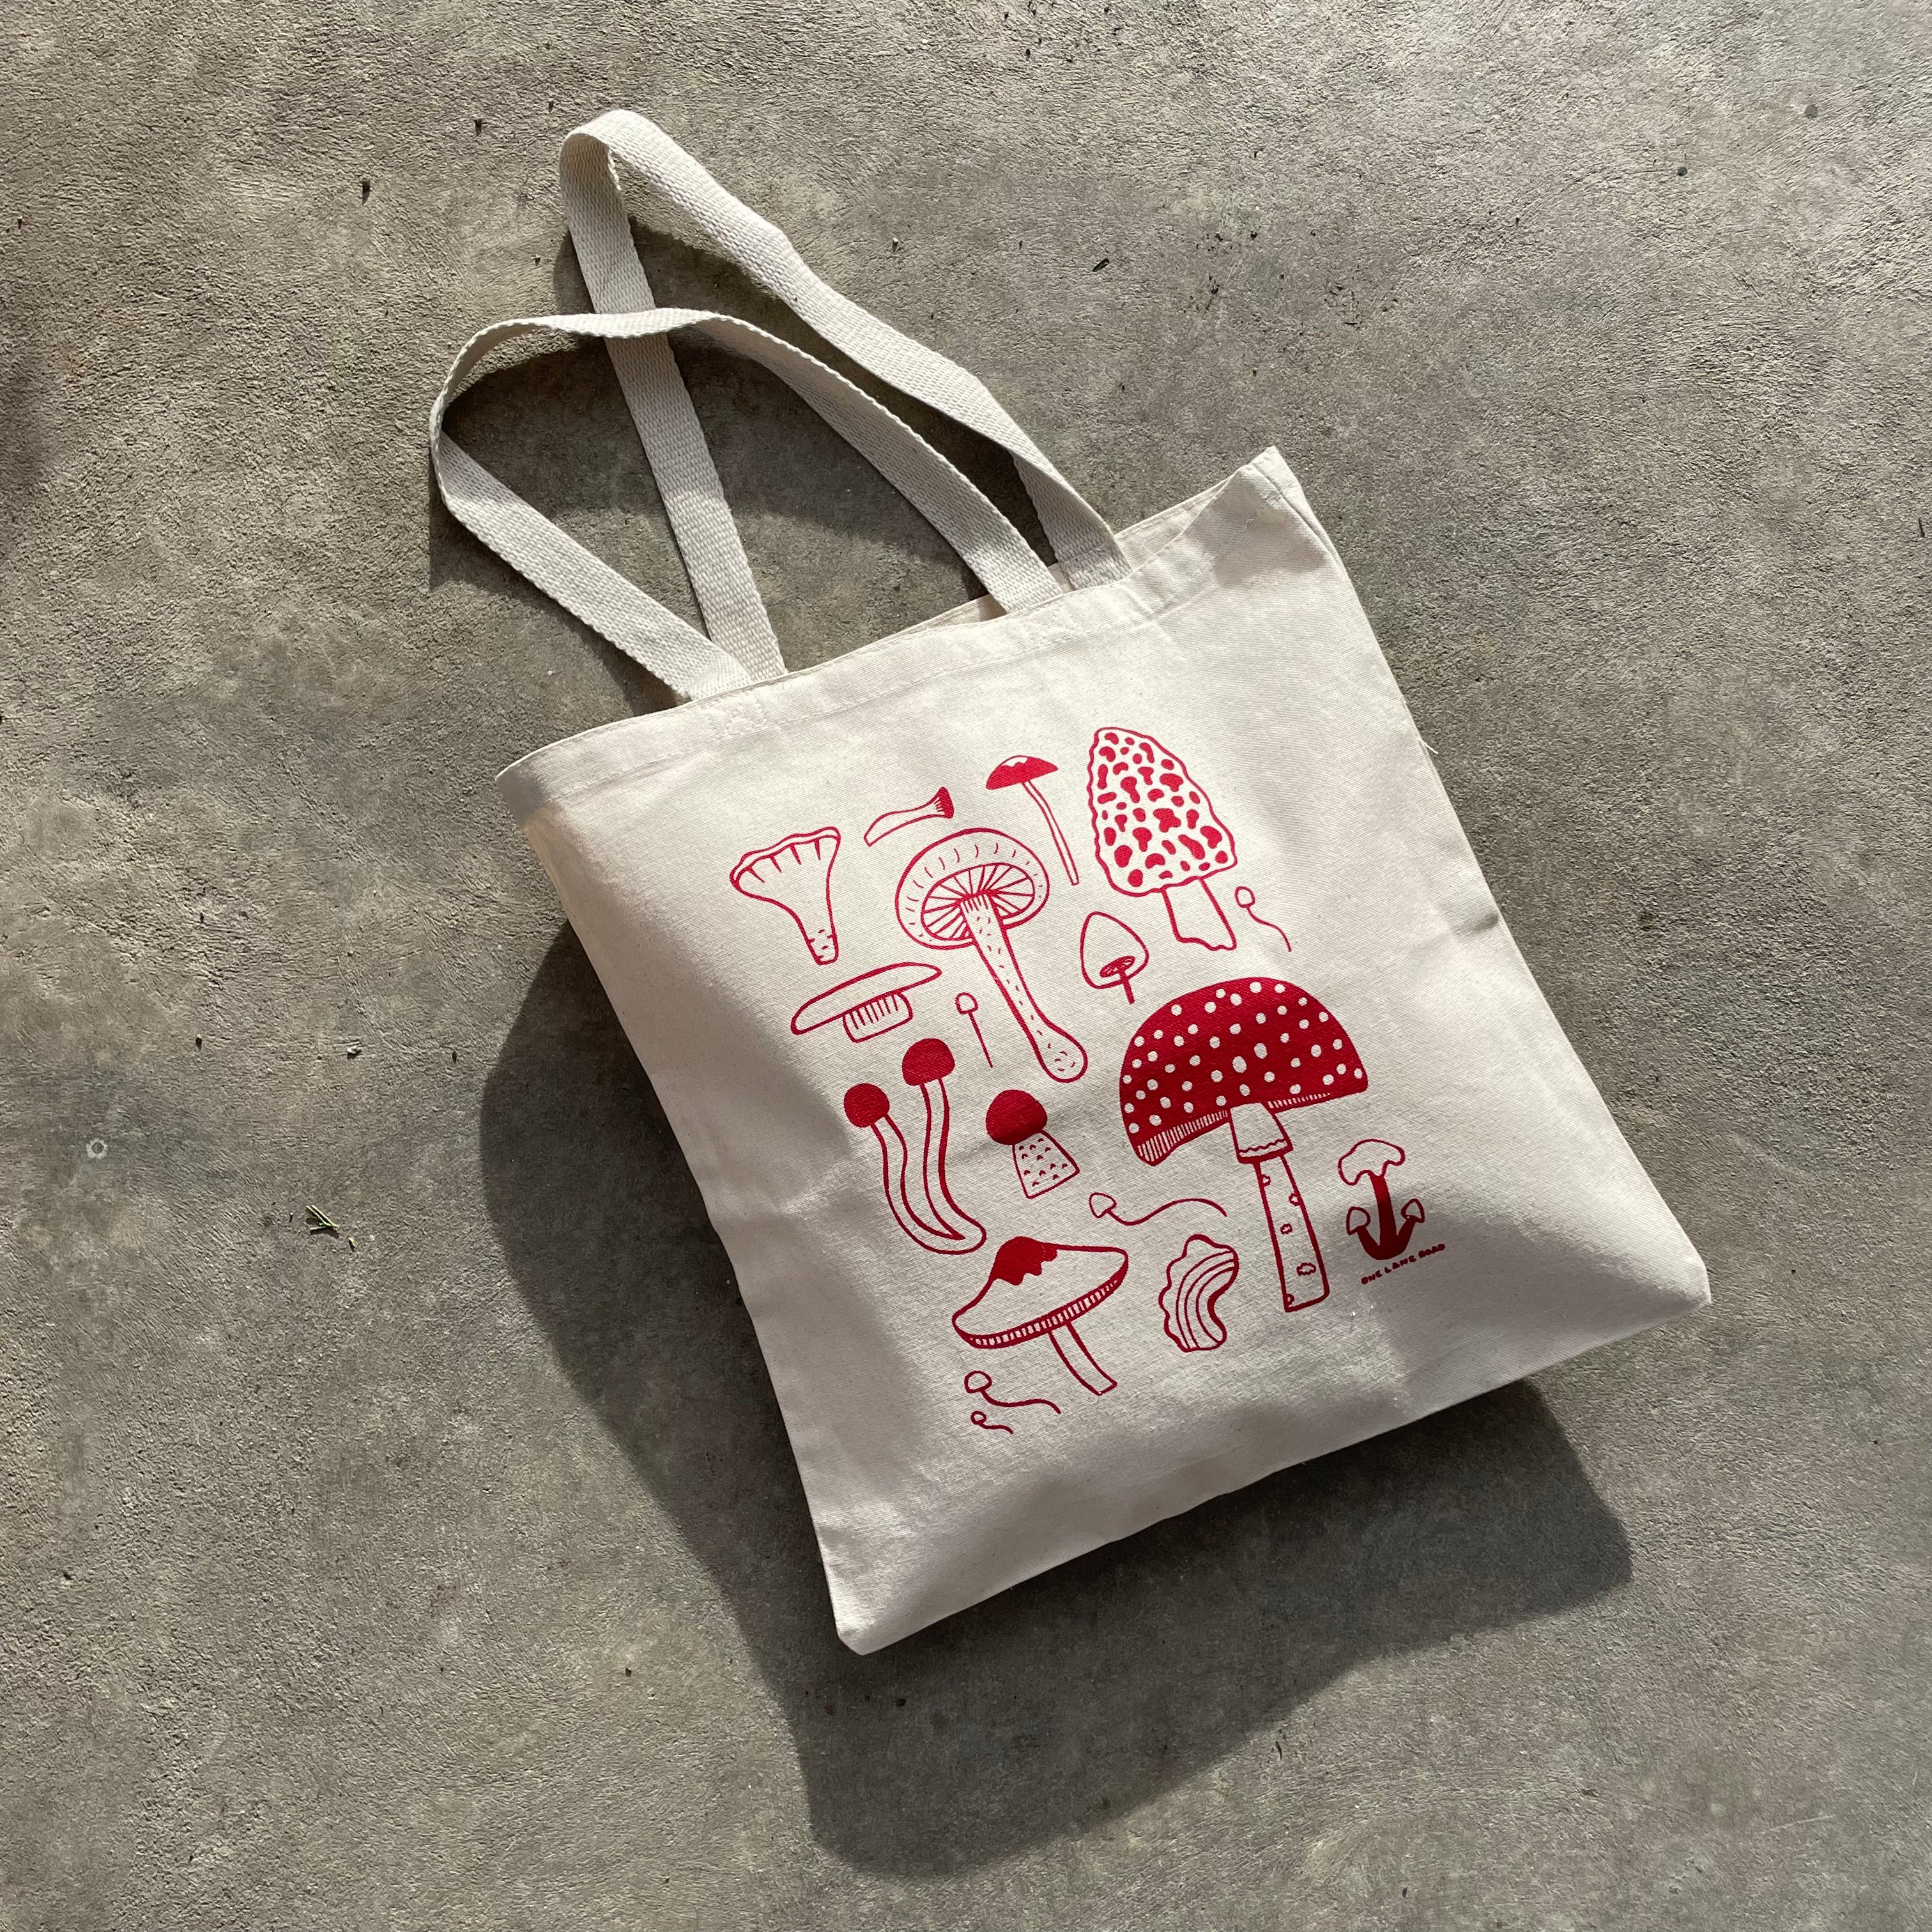 Tote Bag Art Tote Bag Canvas Tote Bag Eco-friendly Shopper 